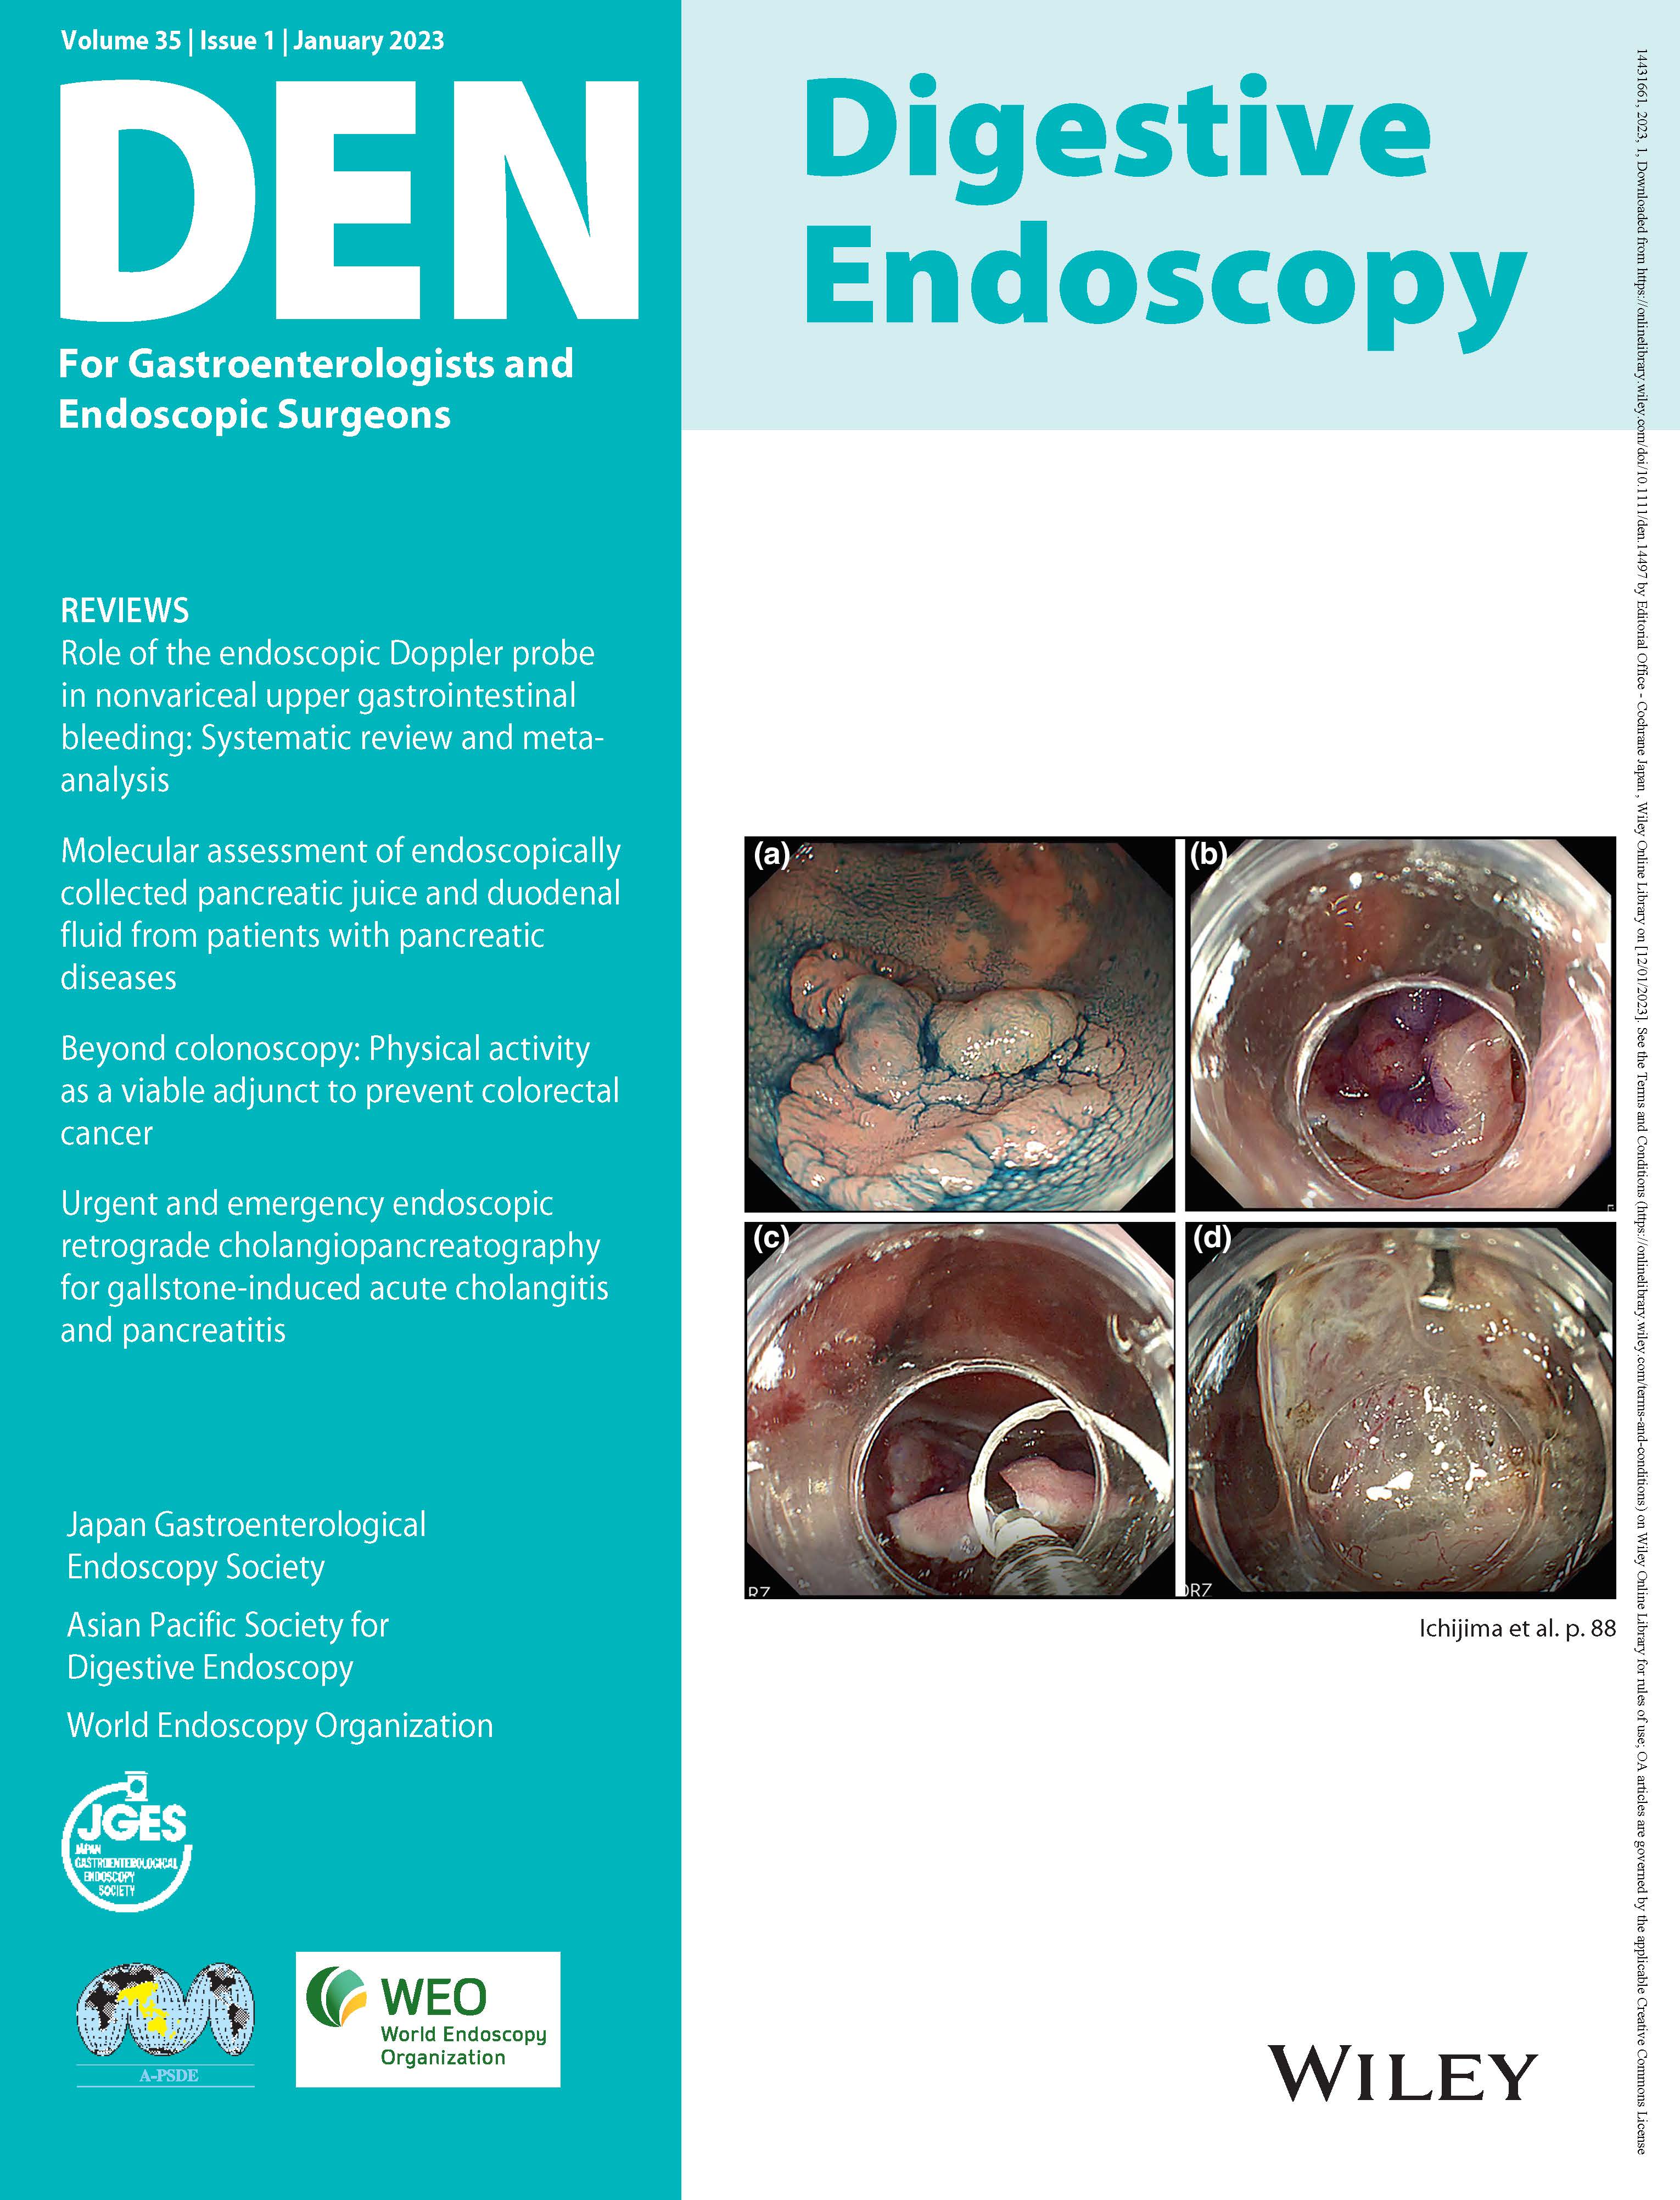 Digestive Endoscopy Vol35-1